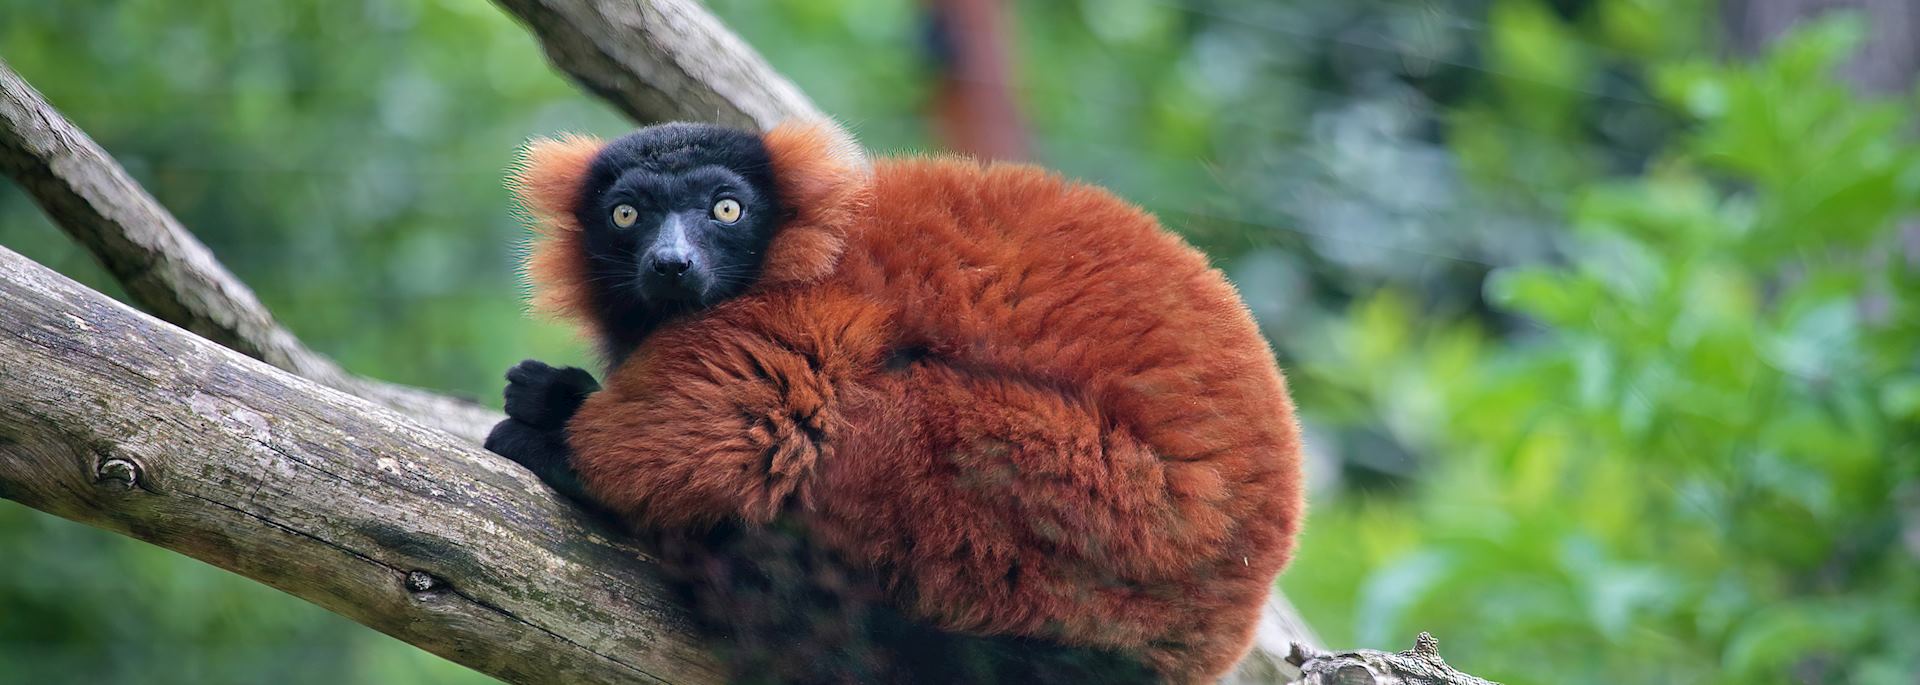 Red ruffed lemur, Madagascar